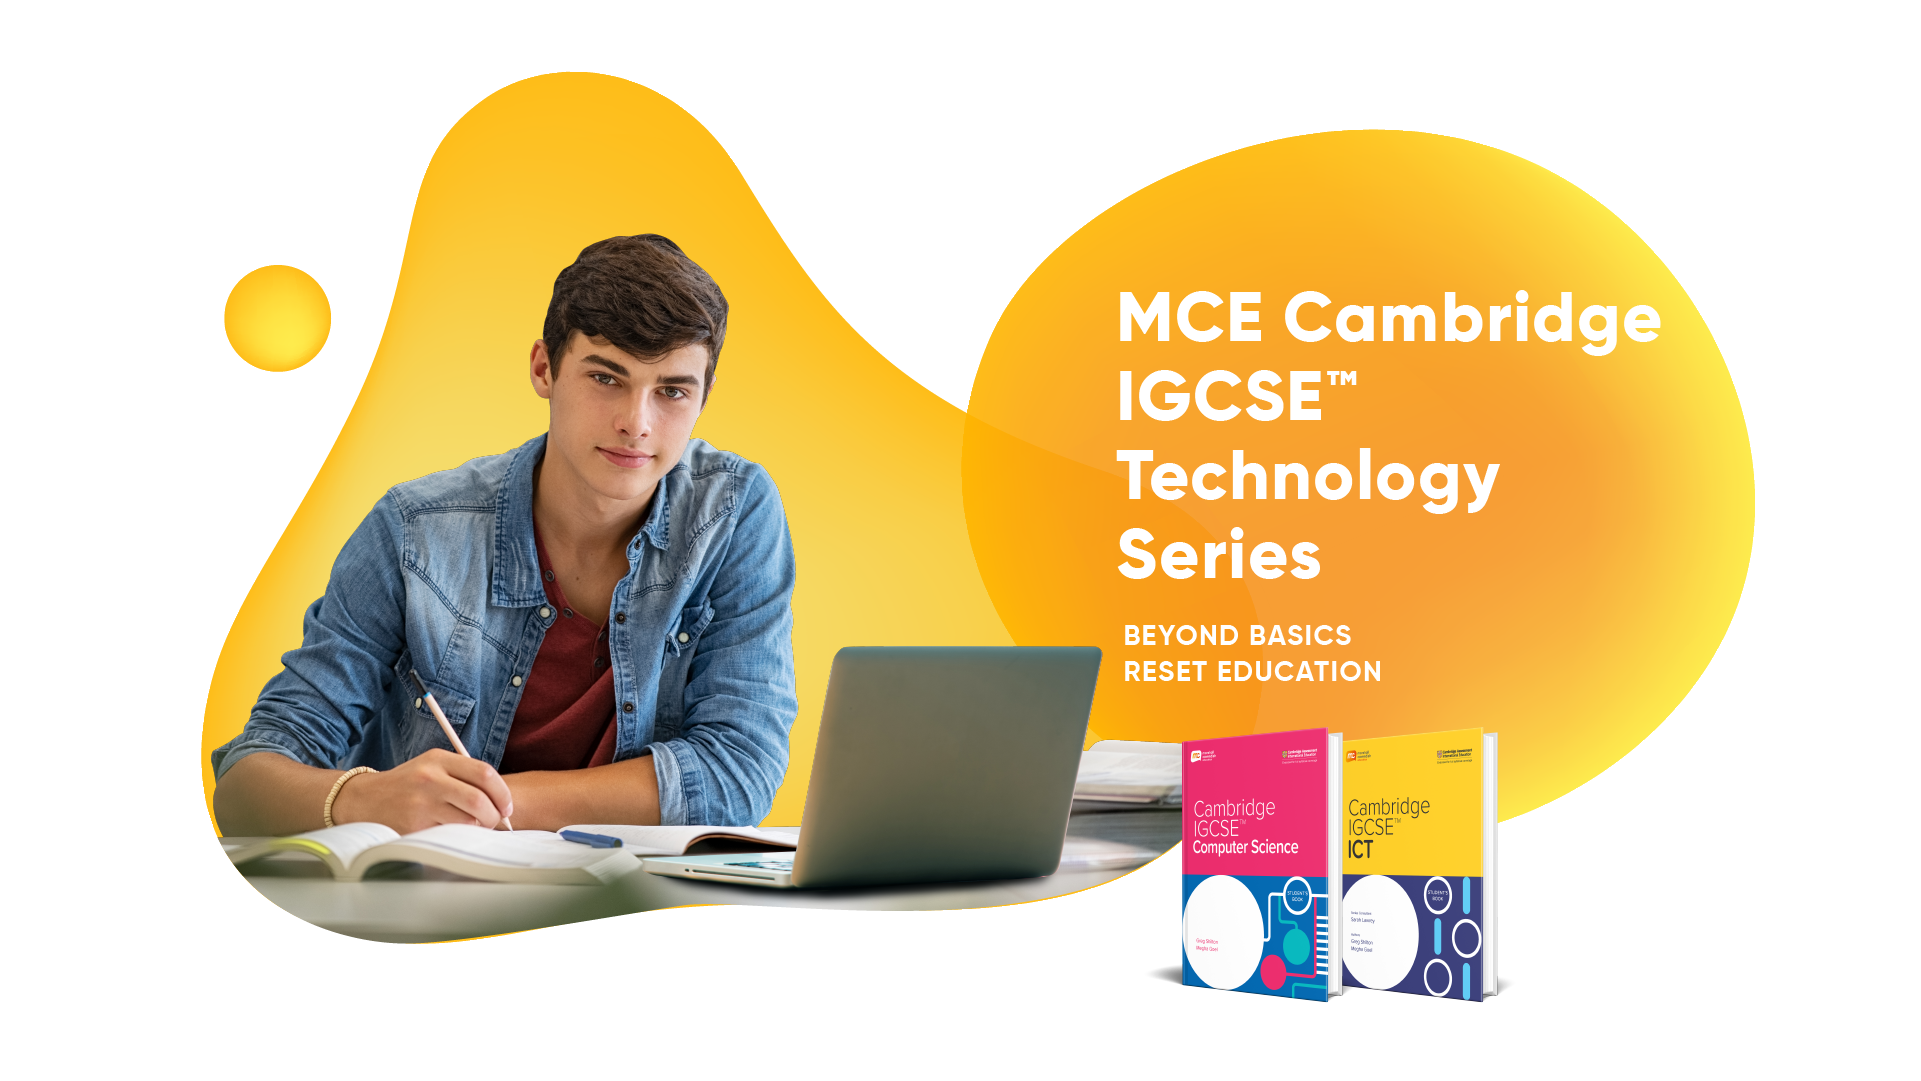 MCE Cambridge IGCSETM Technology Series